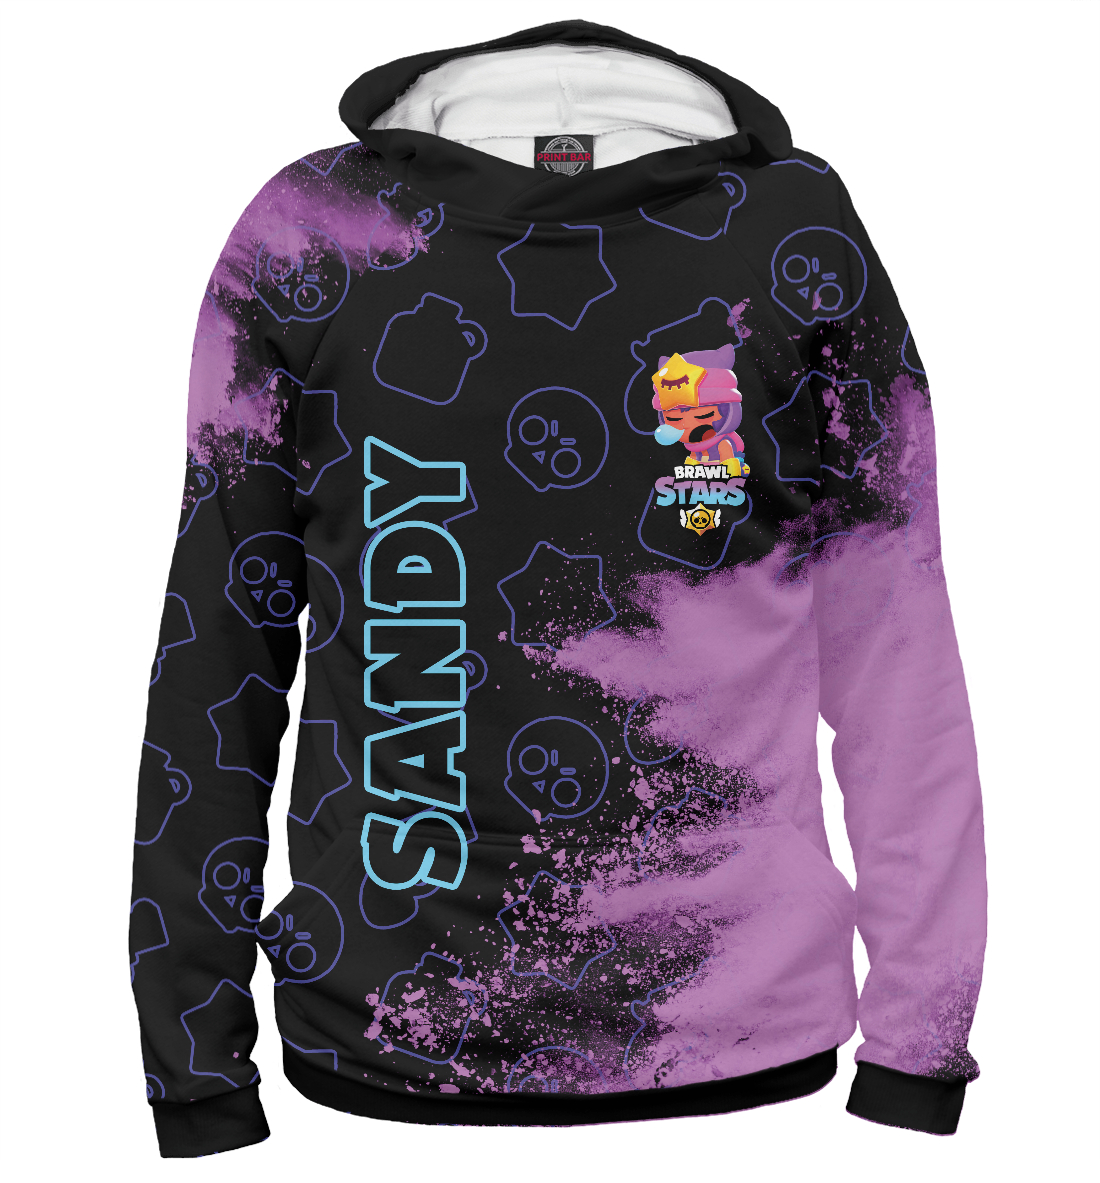 Детский Худи с принтом Brawl Stars Sandy / Сэнди для девочек, артикул CLH-645246-hud-1mp